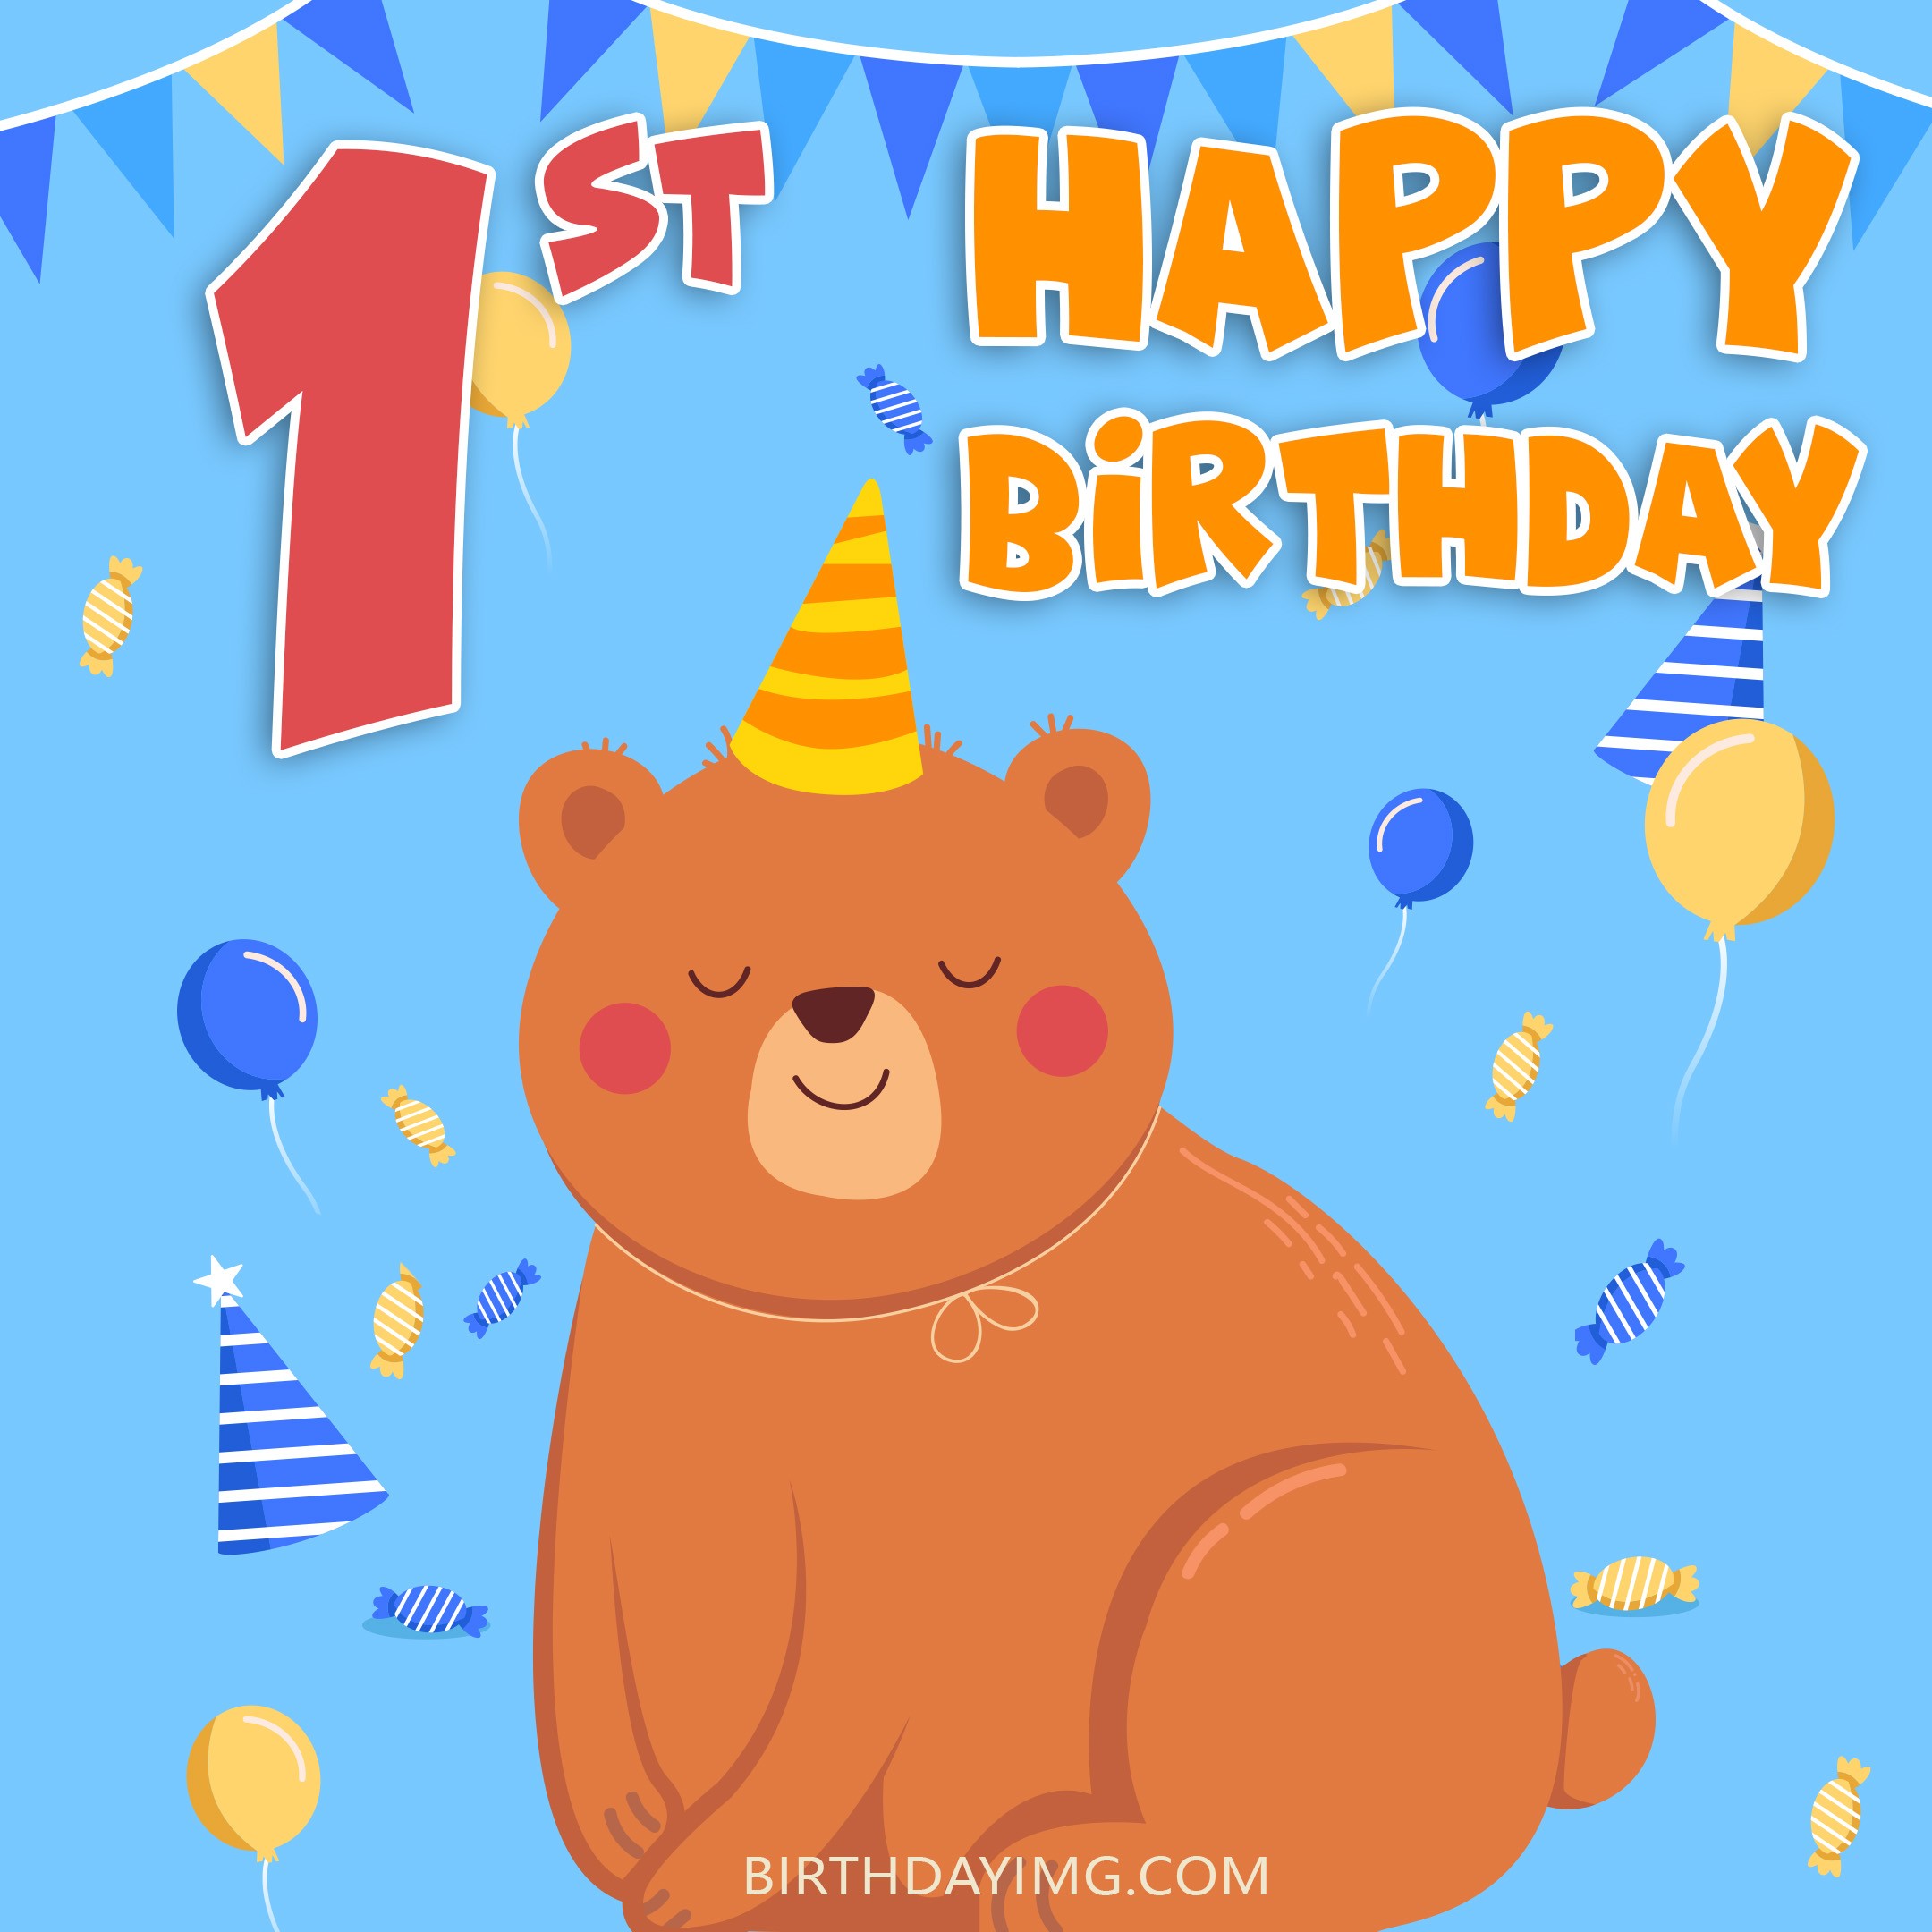 Free 1st Year Happy Birthday Image With Bear And Balloons - birthdayimg.com